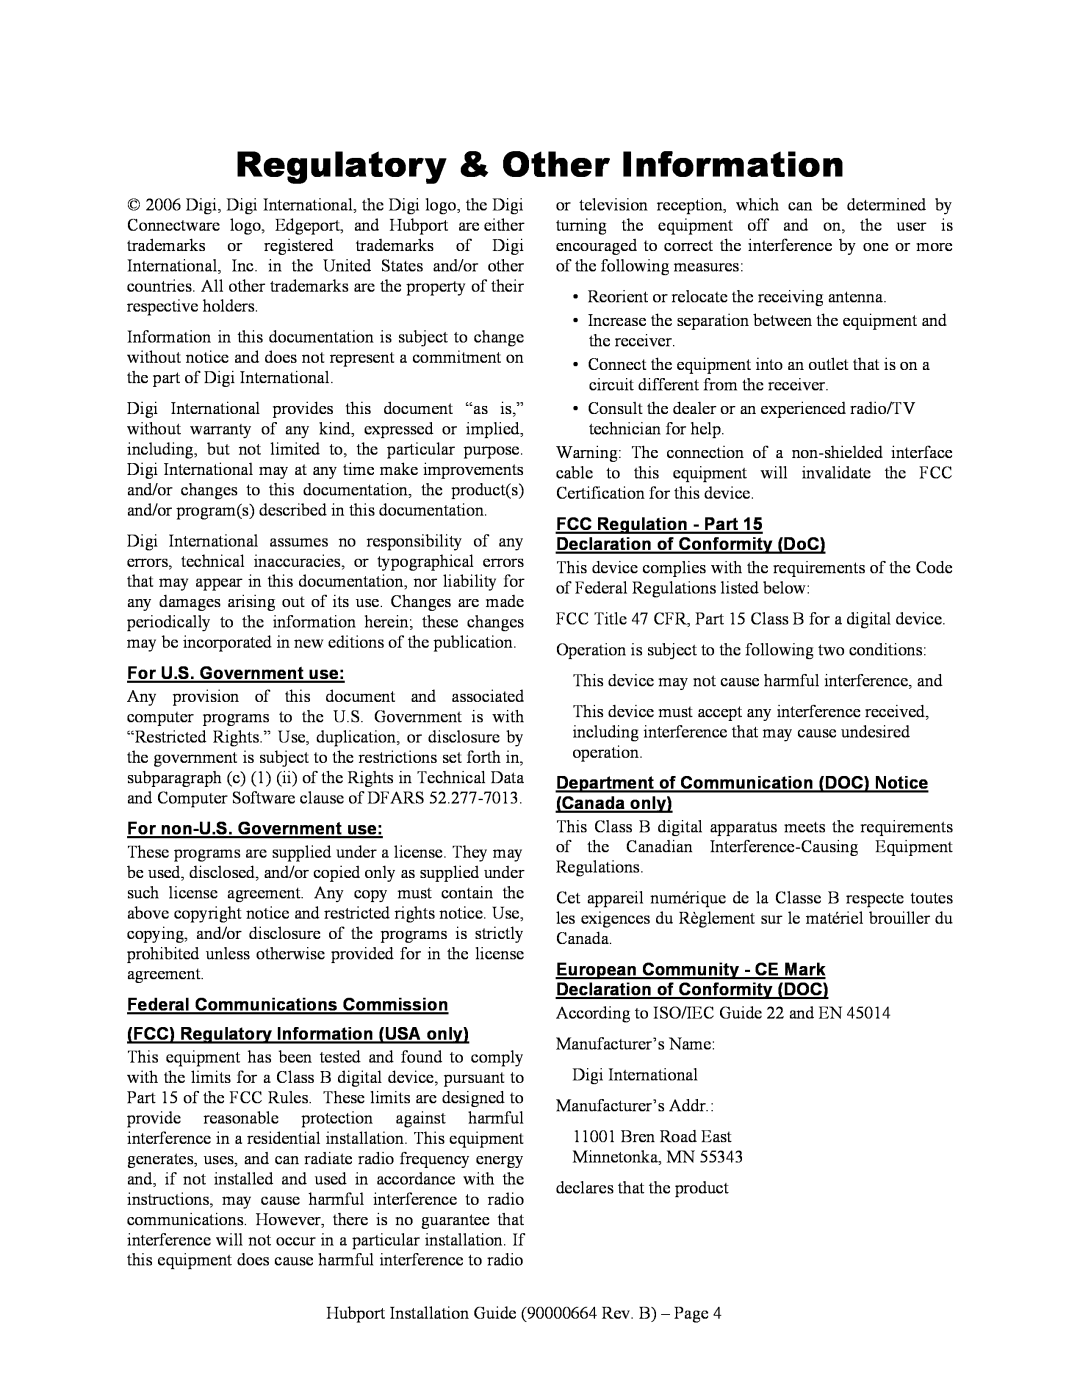 Digi Hubport/7c DC, Hubport/4 manual Regulatory & Other Information, For U.S. Government use, For non-U.S. Government use 